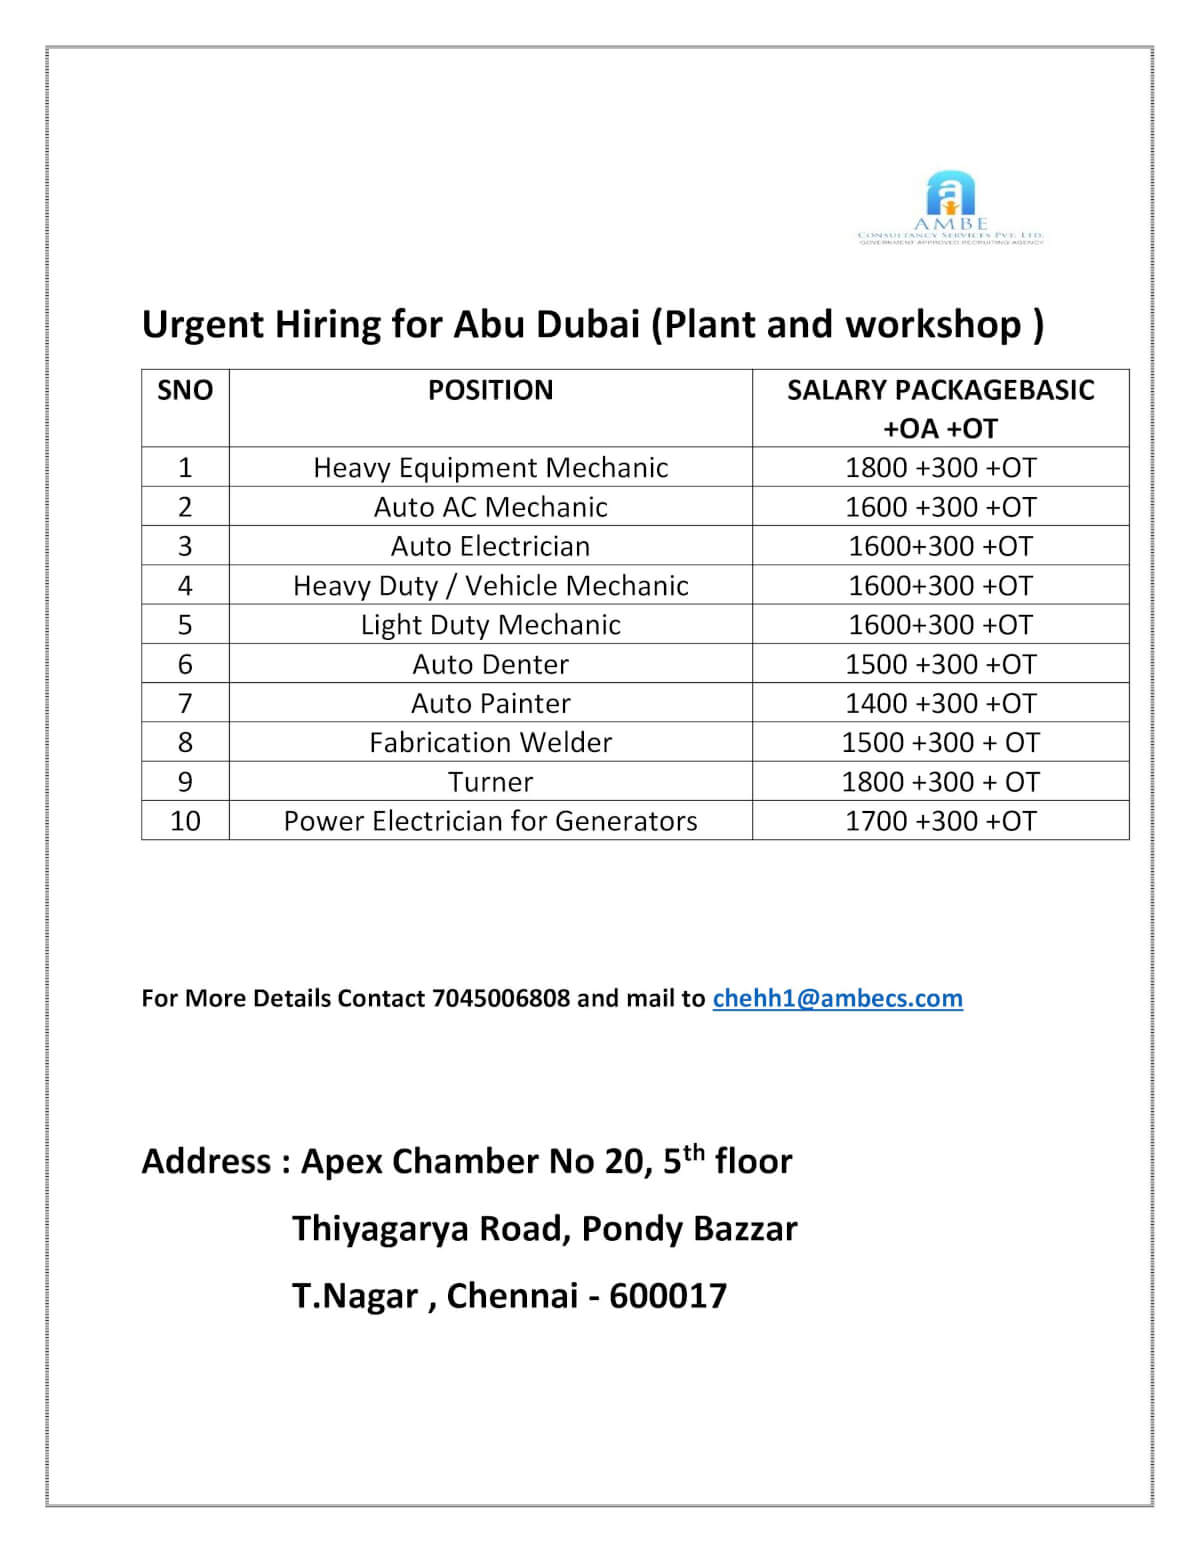 Urgent Hiring for Abu - Dhabi